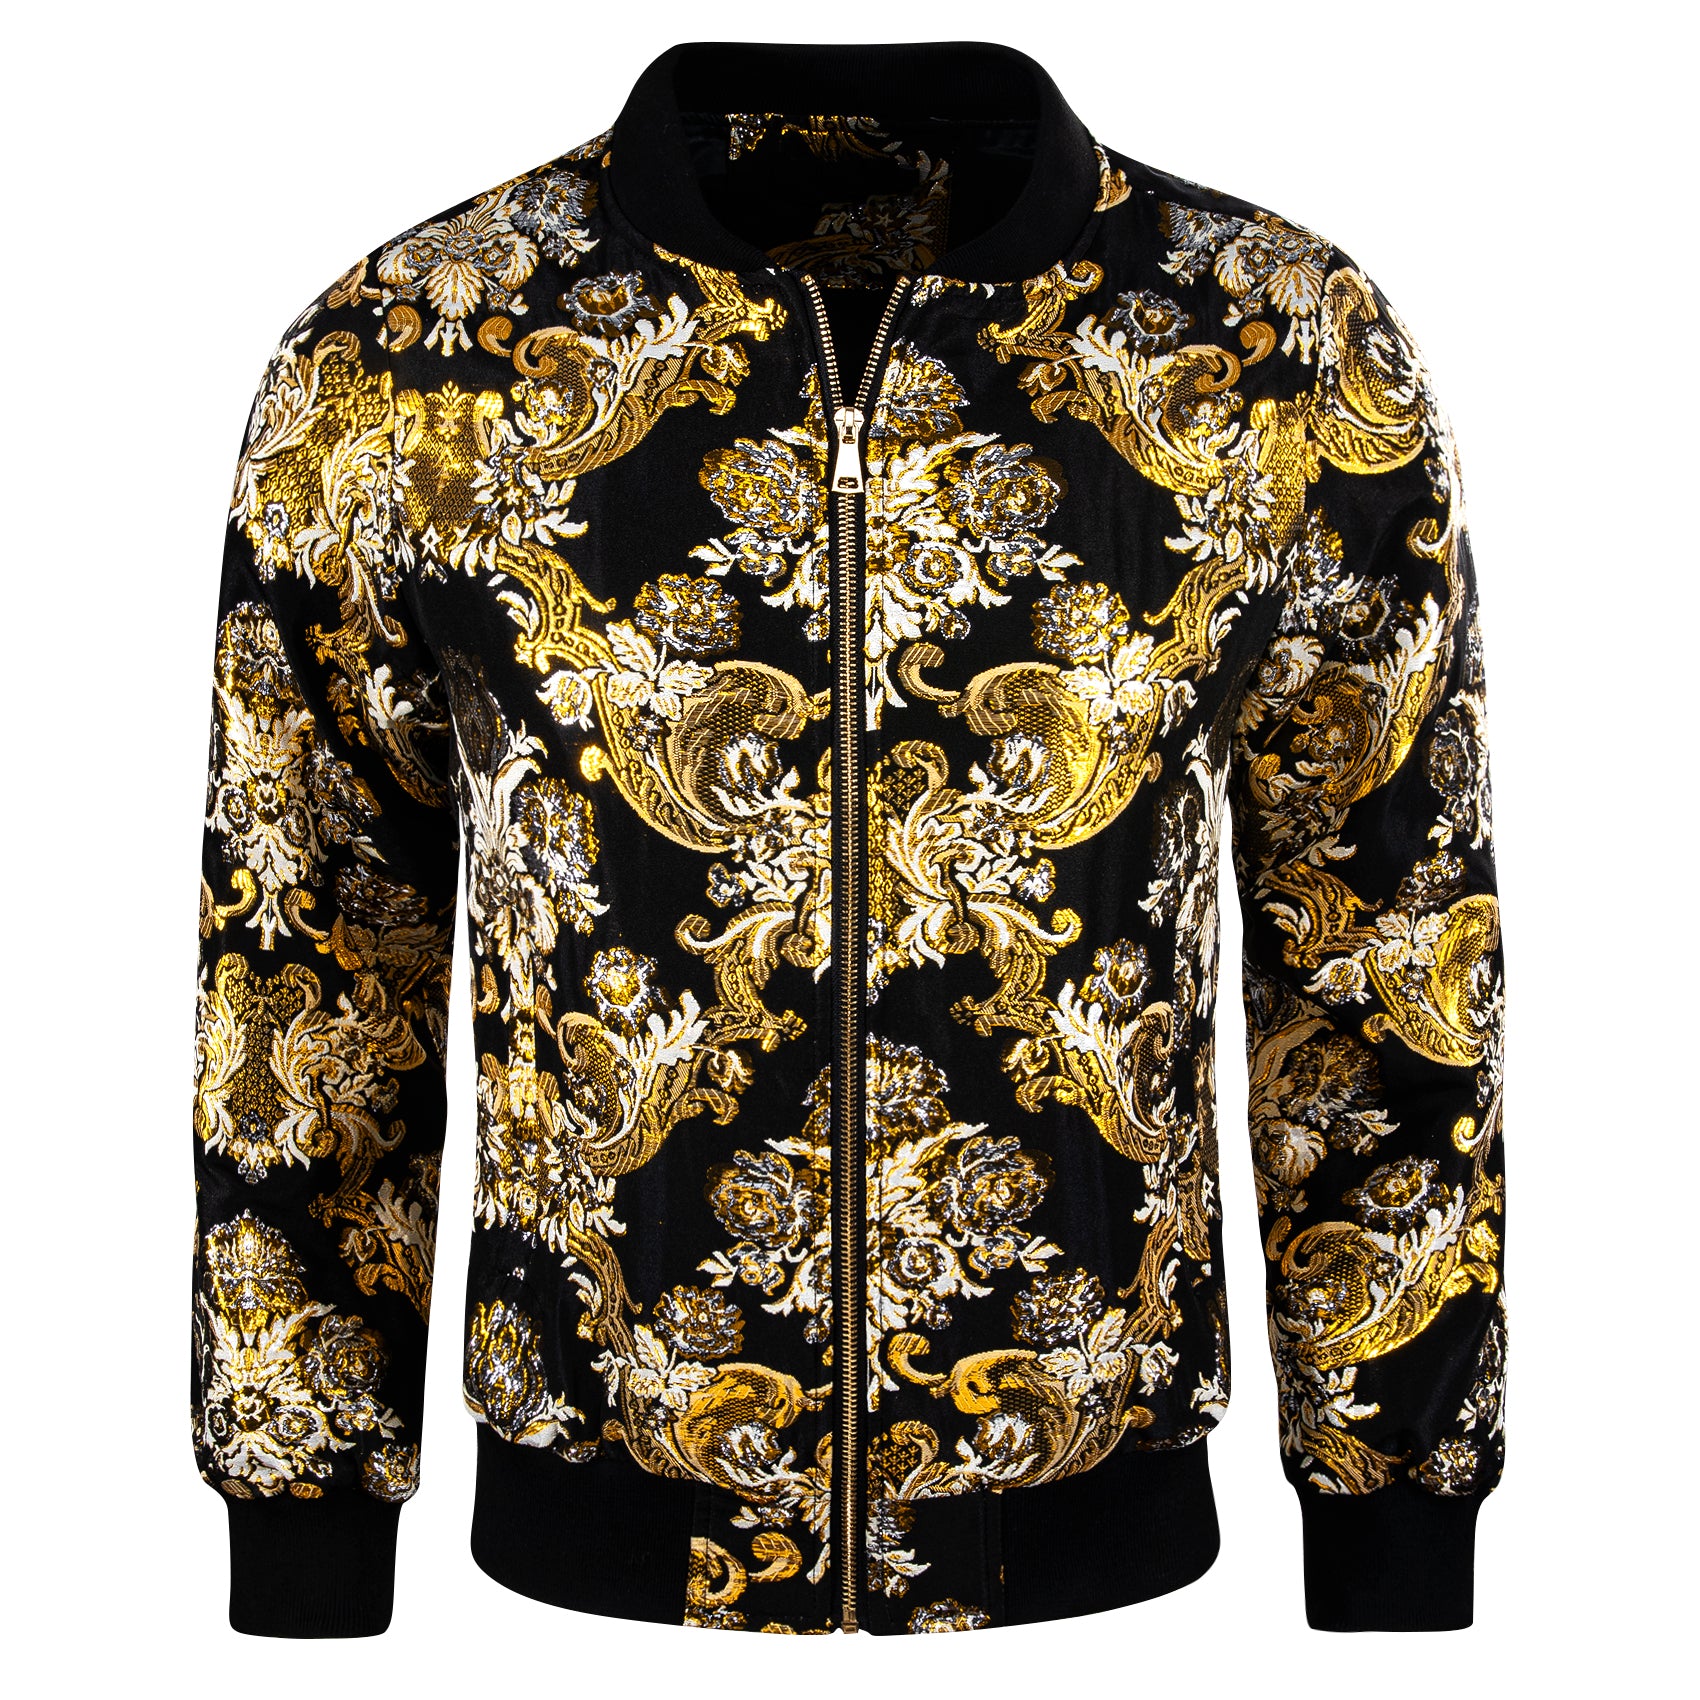 Mens Gold Black Floral Jacquard Paisley Jacket